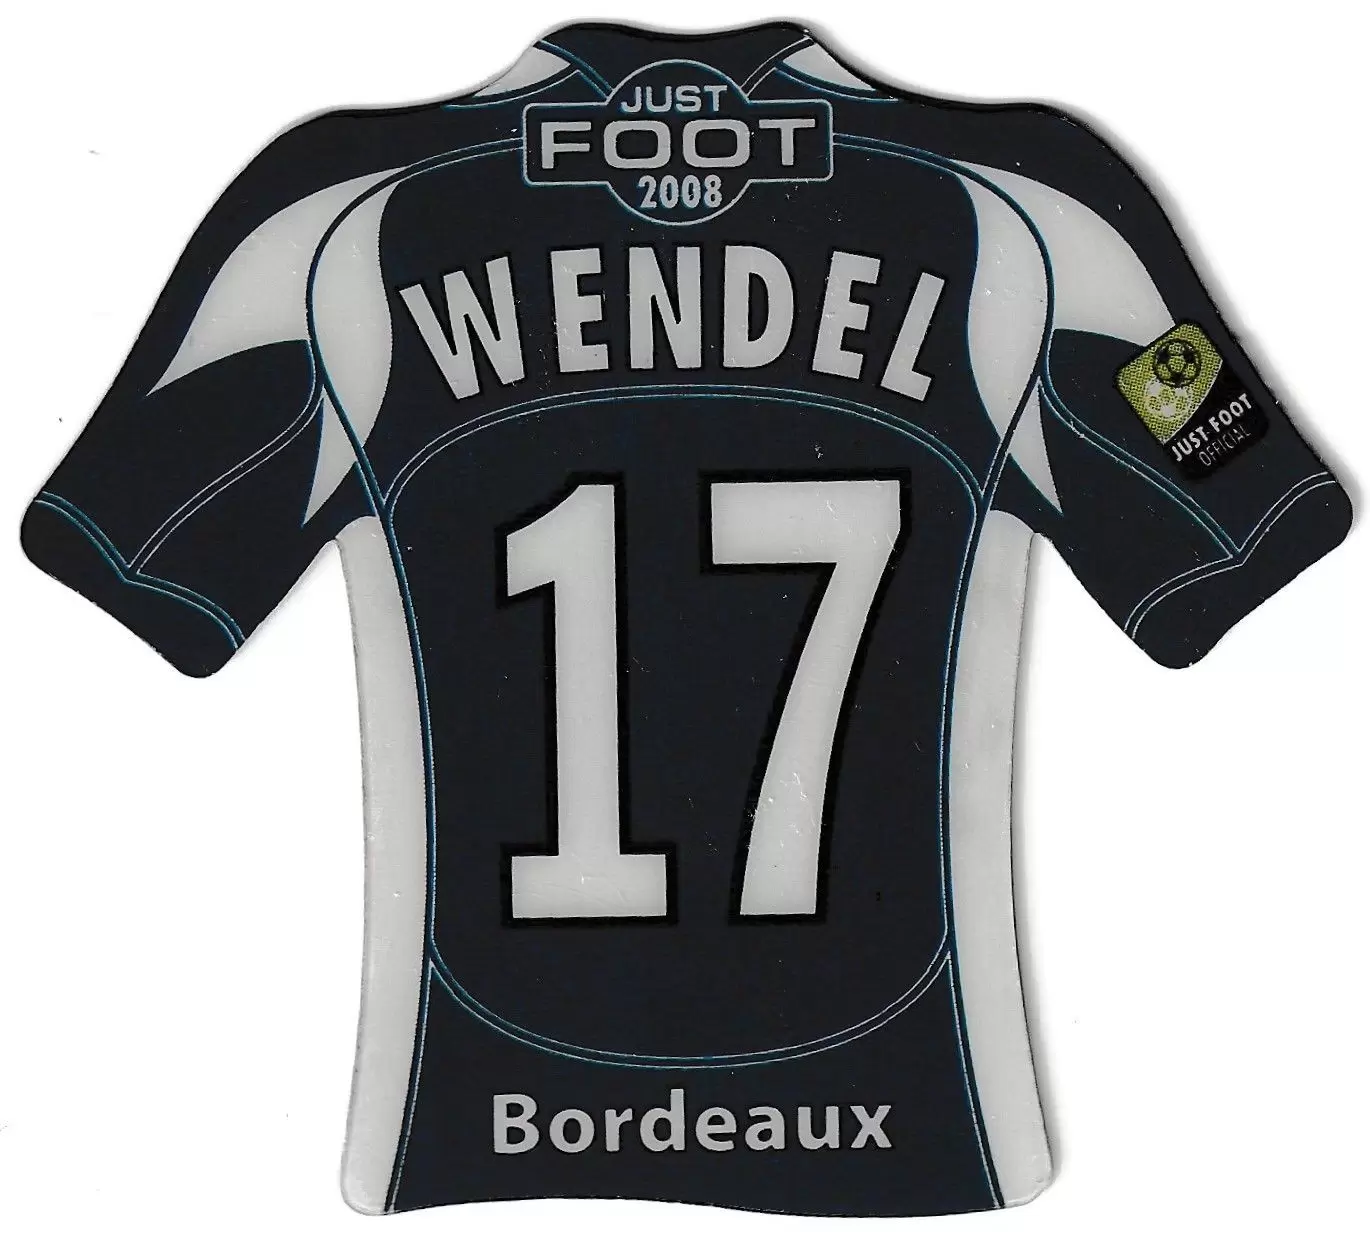 Just Foot 2008 - Bordeaux 17 - Wendel